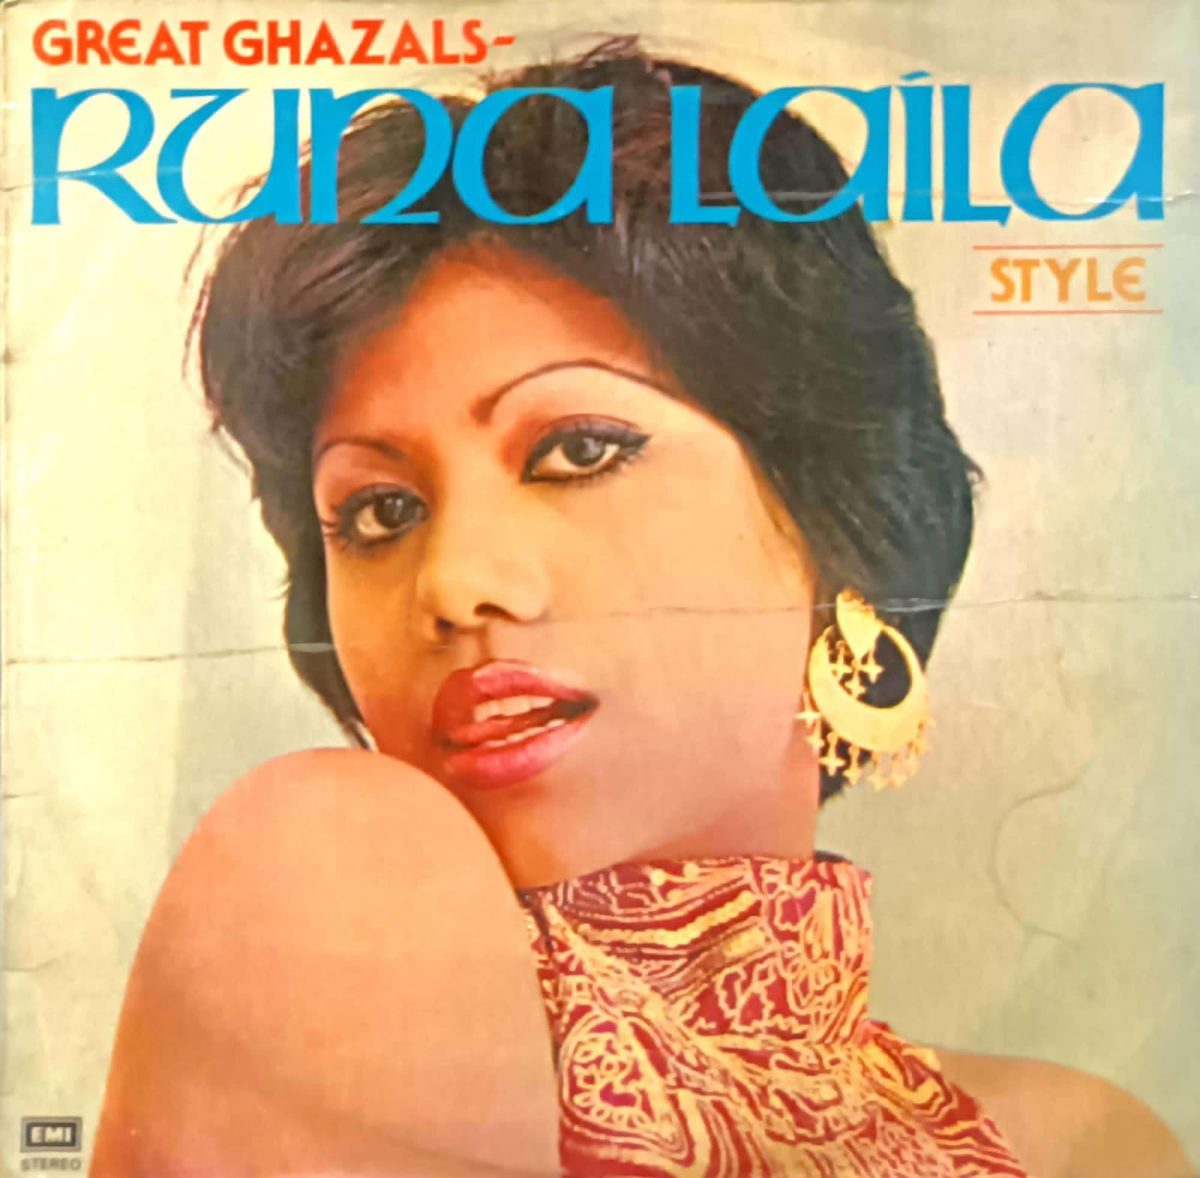 Great Ghazals- Runa Laila Style "Passions;vinyl_record gramophone house